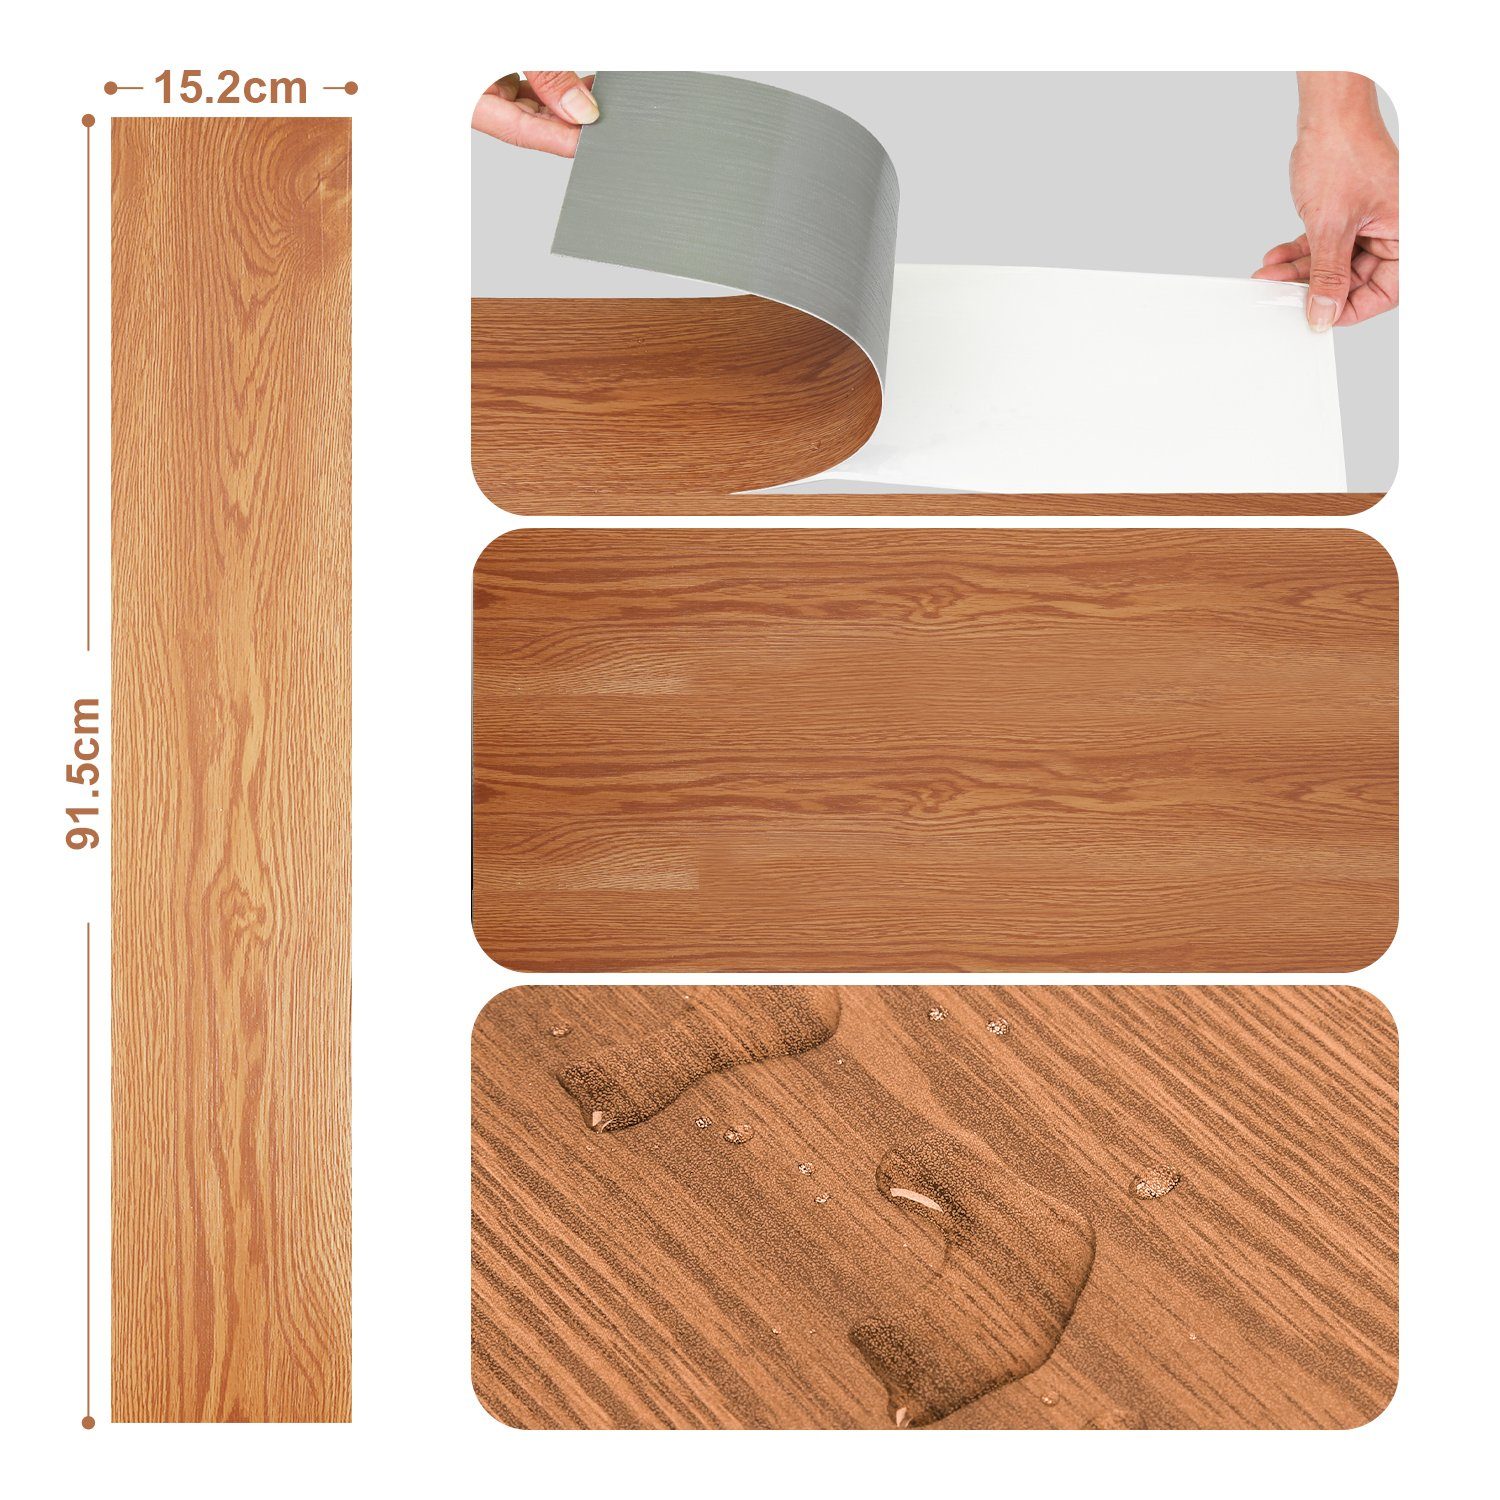 selbstklebend Vinylplanke cmx15,2cm, Planken, Vinylboden selbstklebend,selbstklebende 91,4 Classic Oak Warm Gimisgu Größe